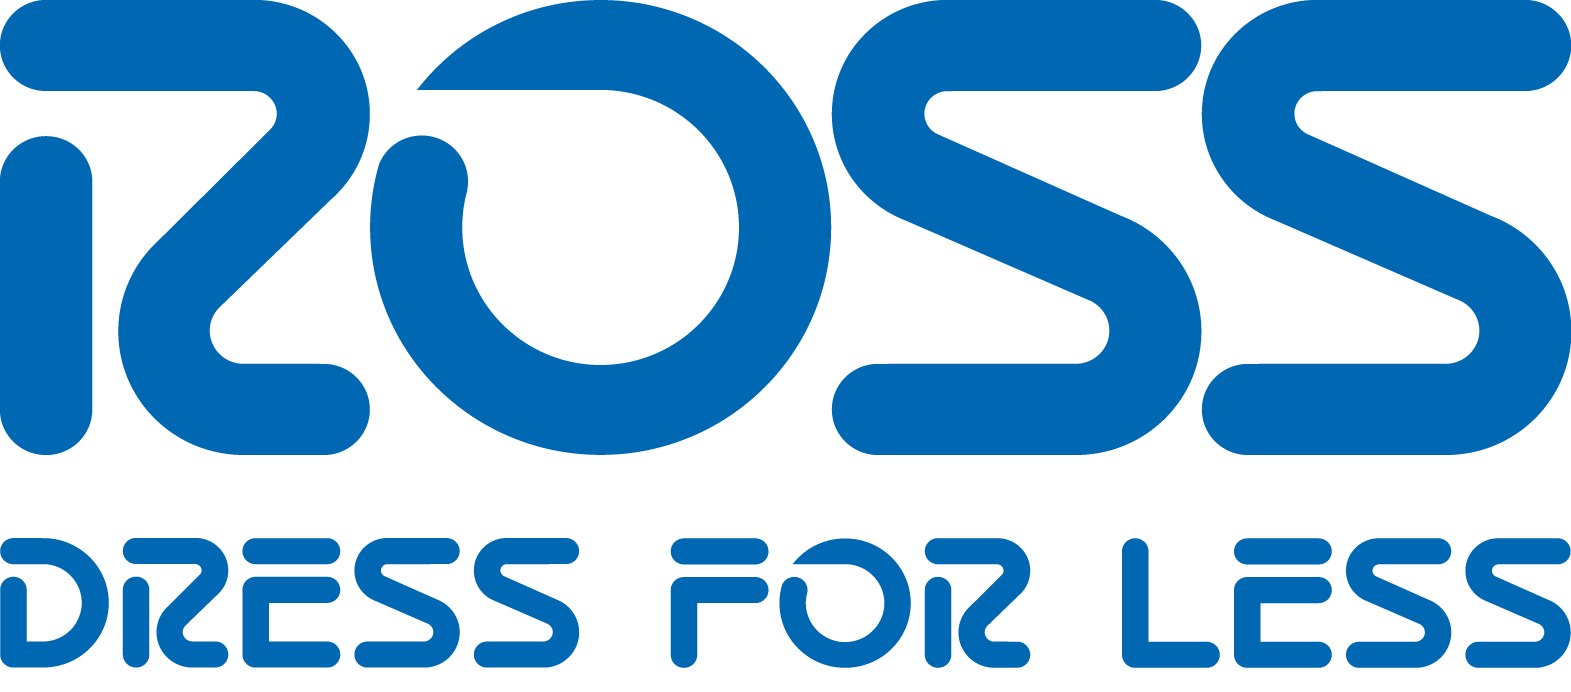 Ross Logo.png